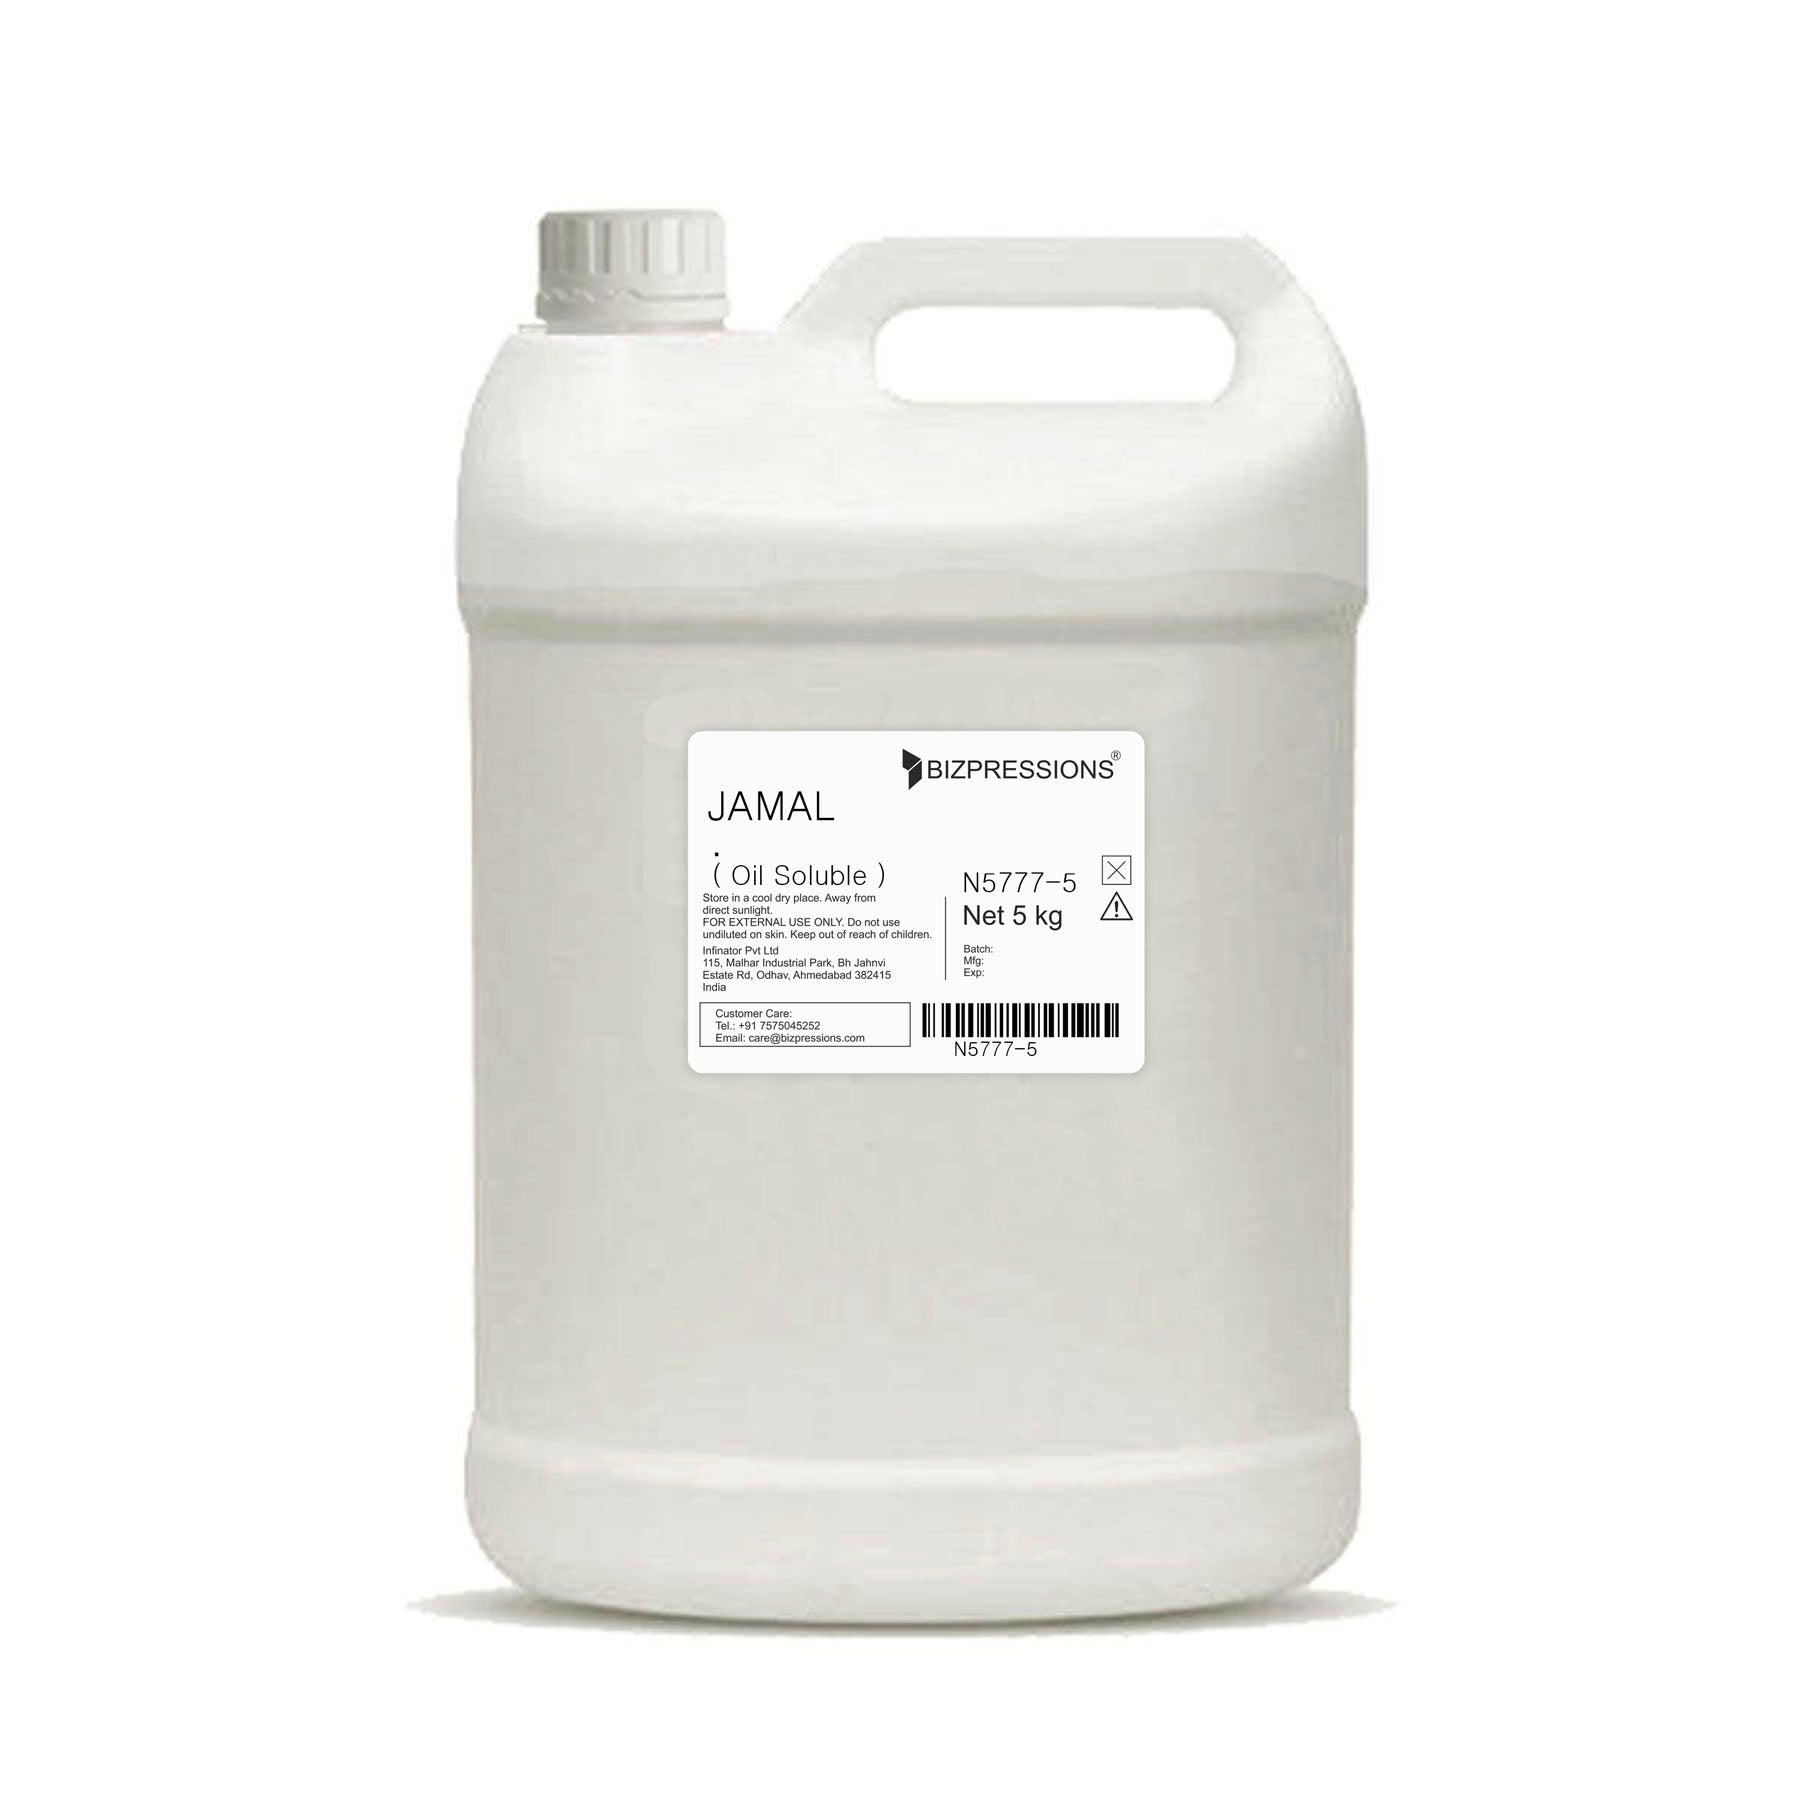 JAMAL - Fragrance ( Oil Soluble ) - 5 kg